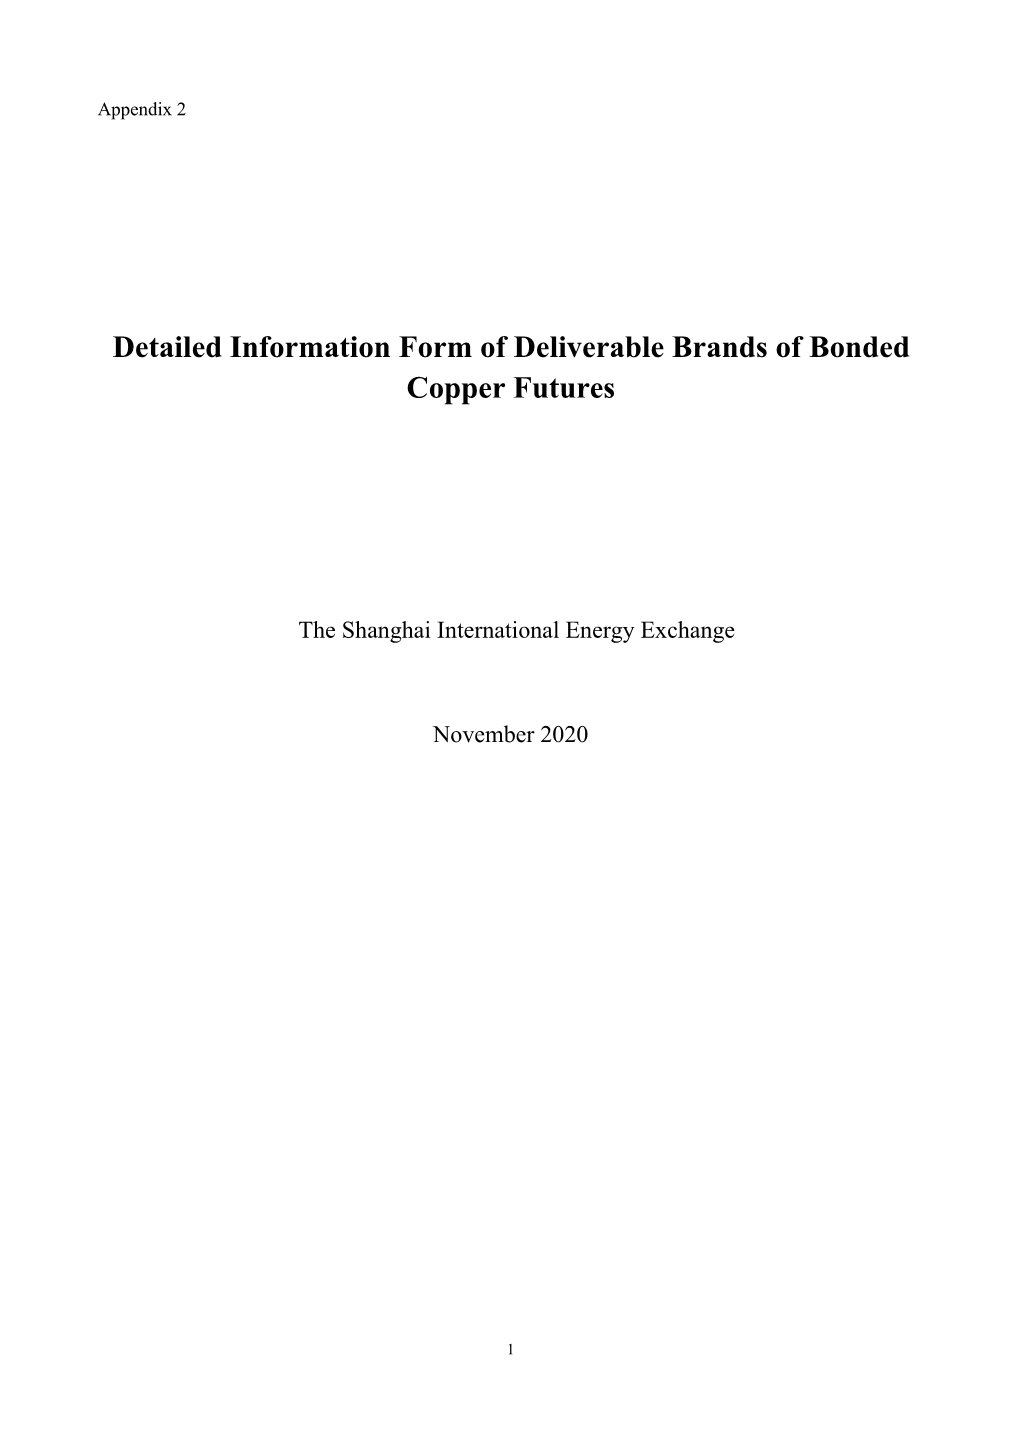 Detailed Information Form of Deliverable Brands of Bonded Copper Futures